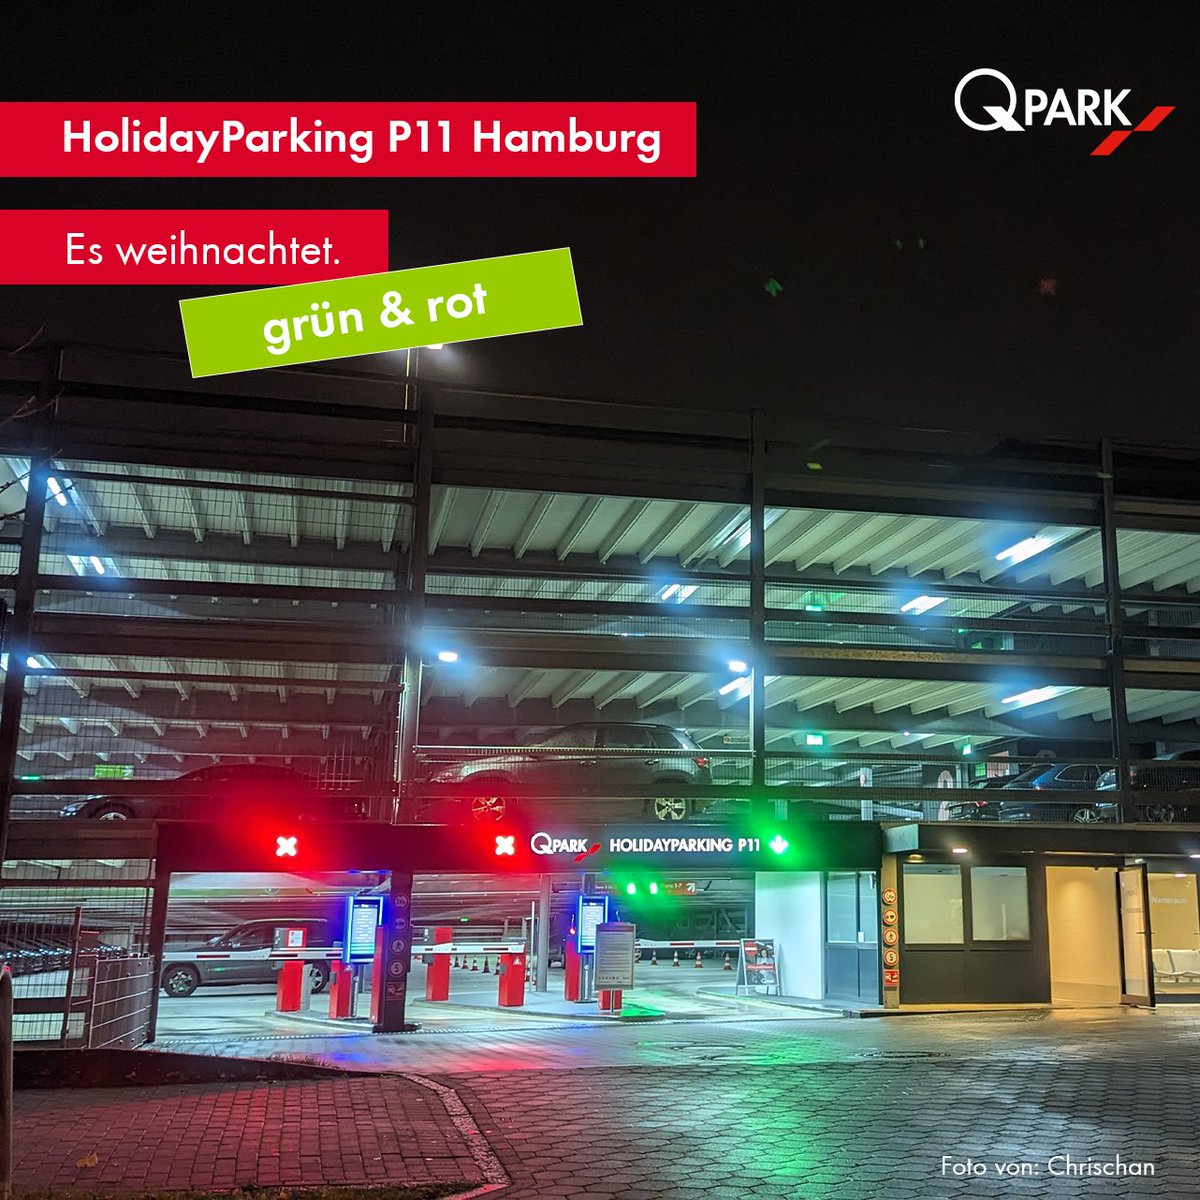 q-park holiday parking p11